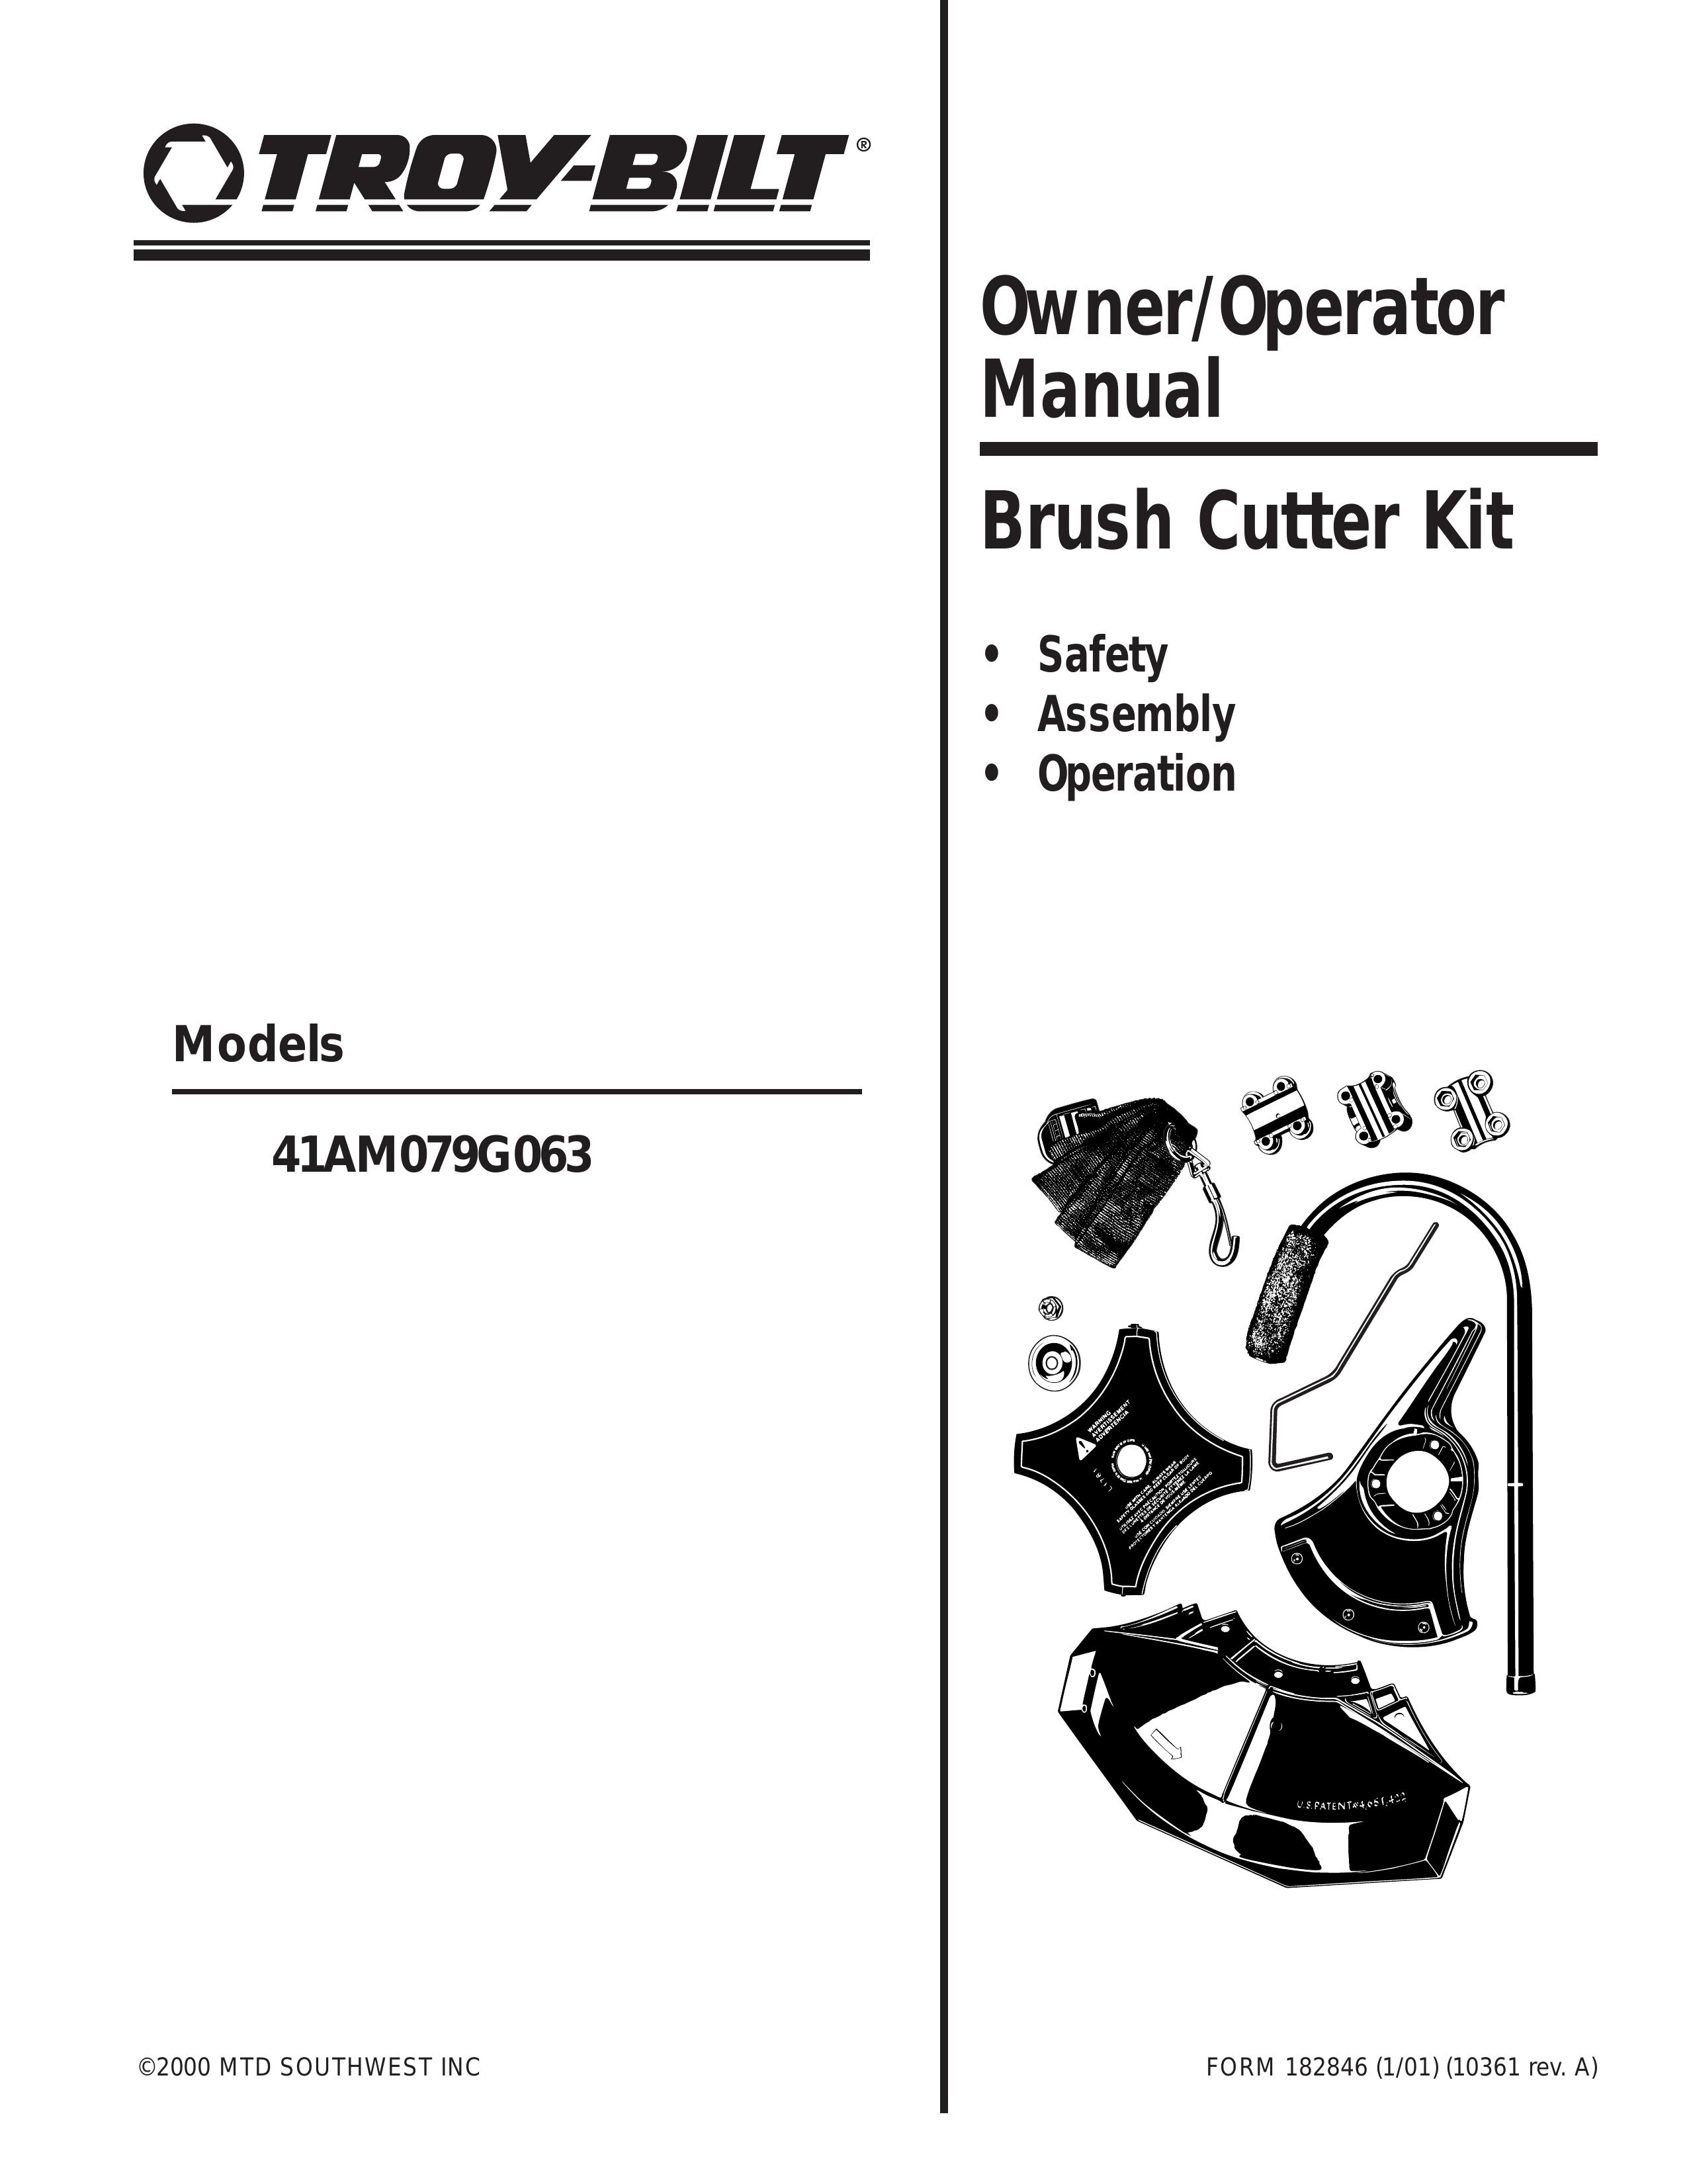 Troy-Bilt 41 AM079G063 Brush Cutter User Manual